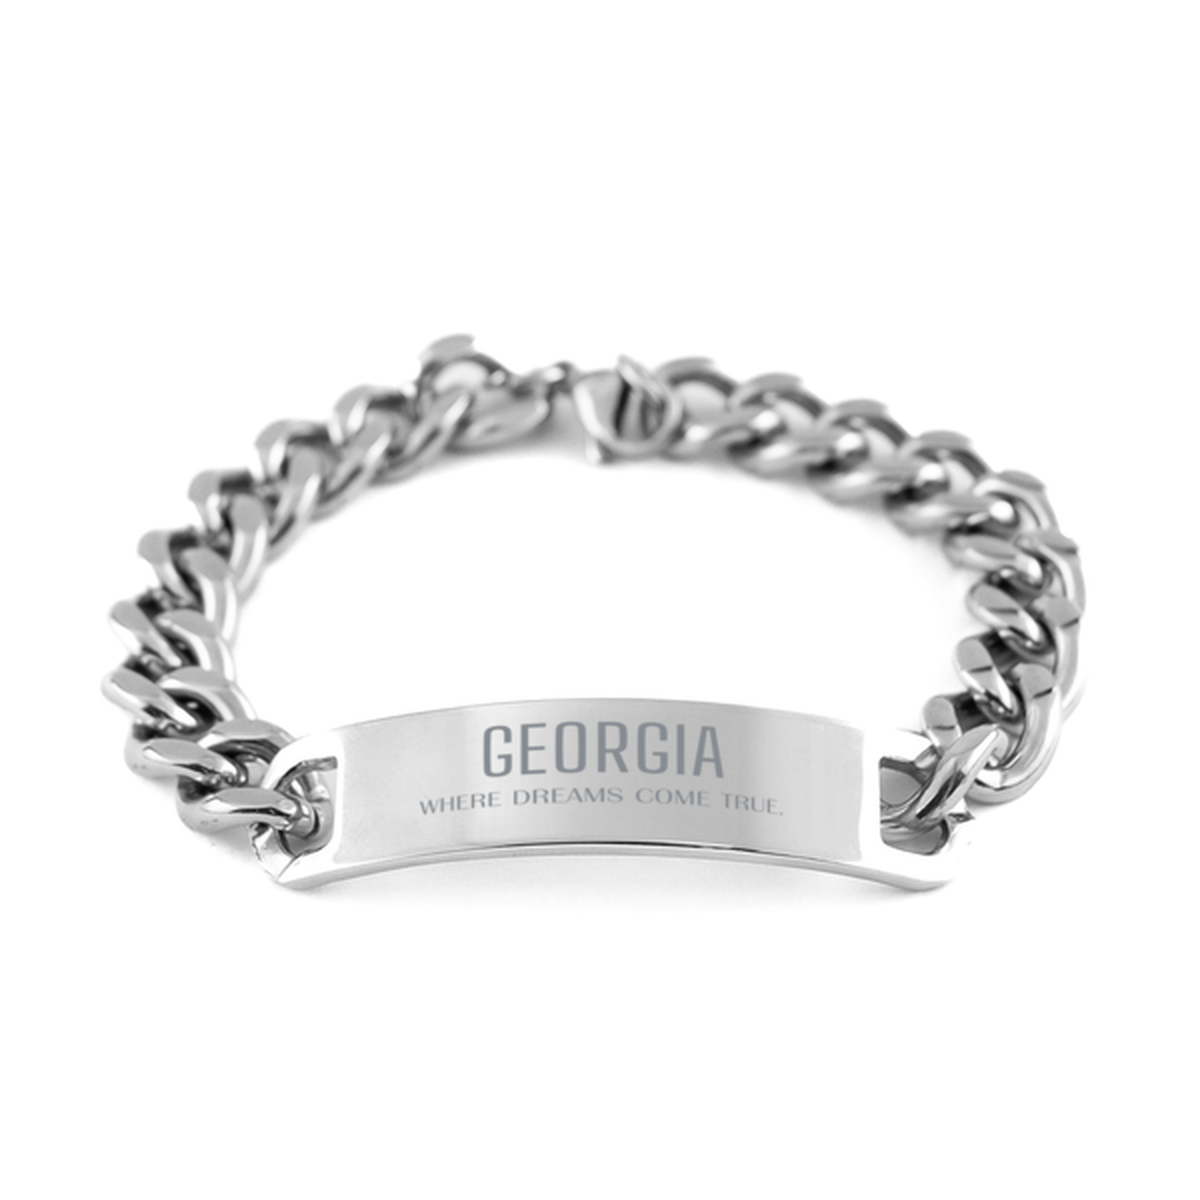 Love Georgia State Cuban Chain Stainless Steel Bracelet, Georgia Where dreams come true, Birthday Inspirational Gifts For Georgia Men, Women, Friends